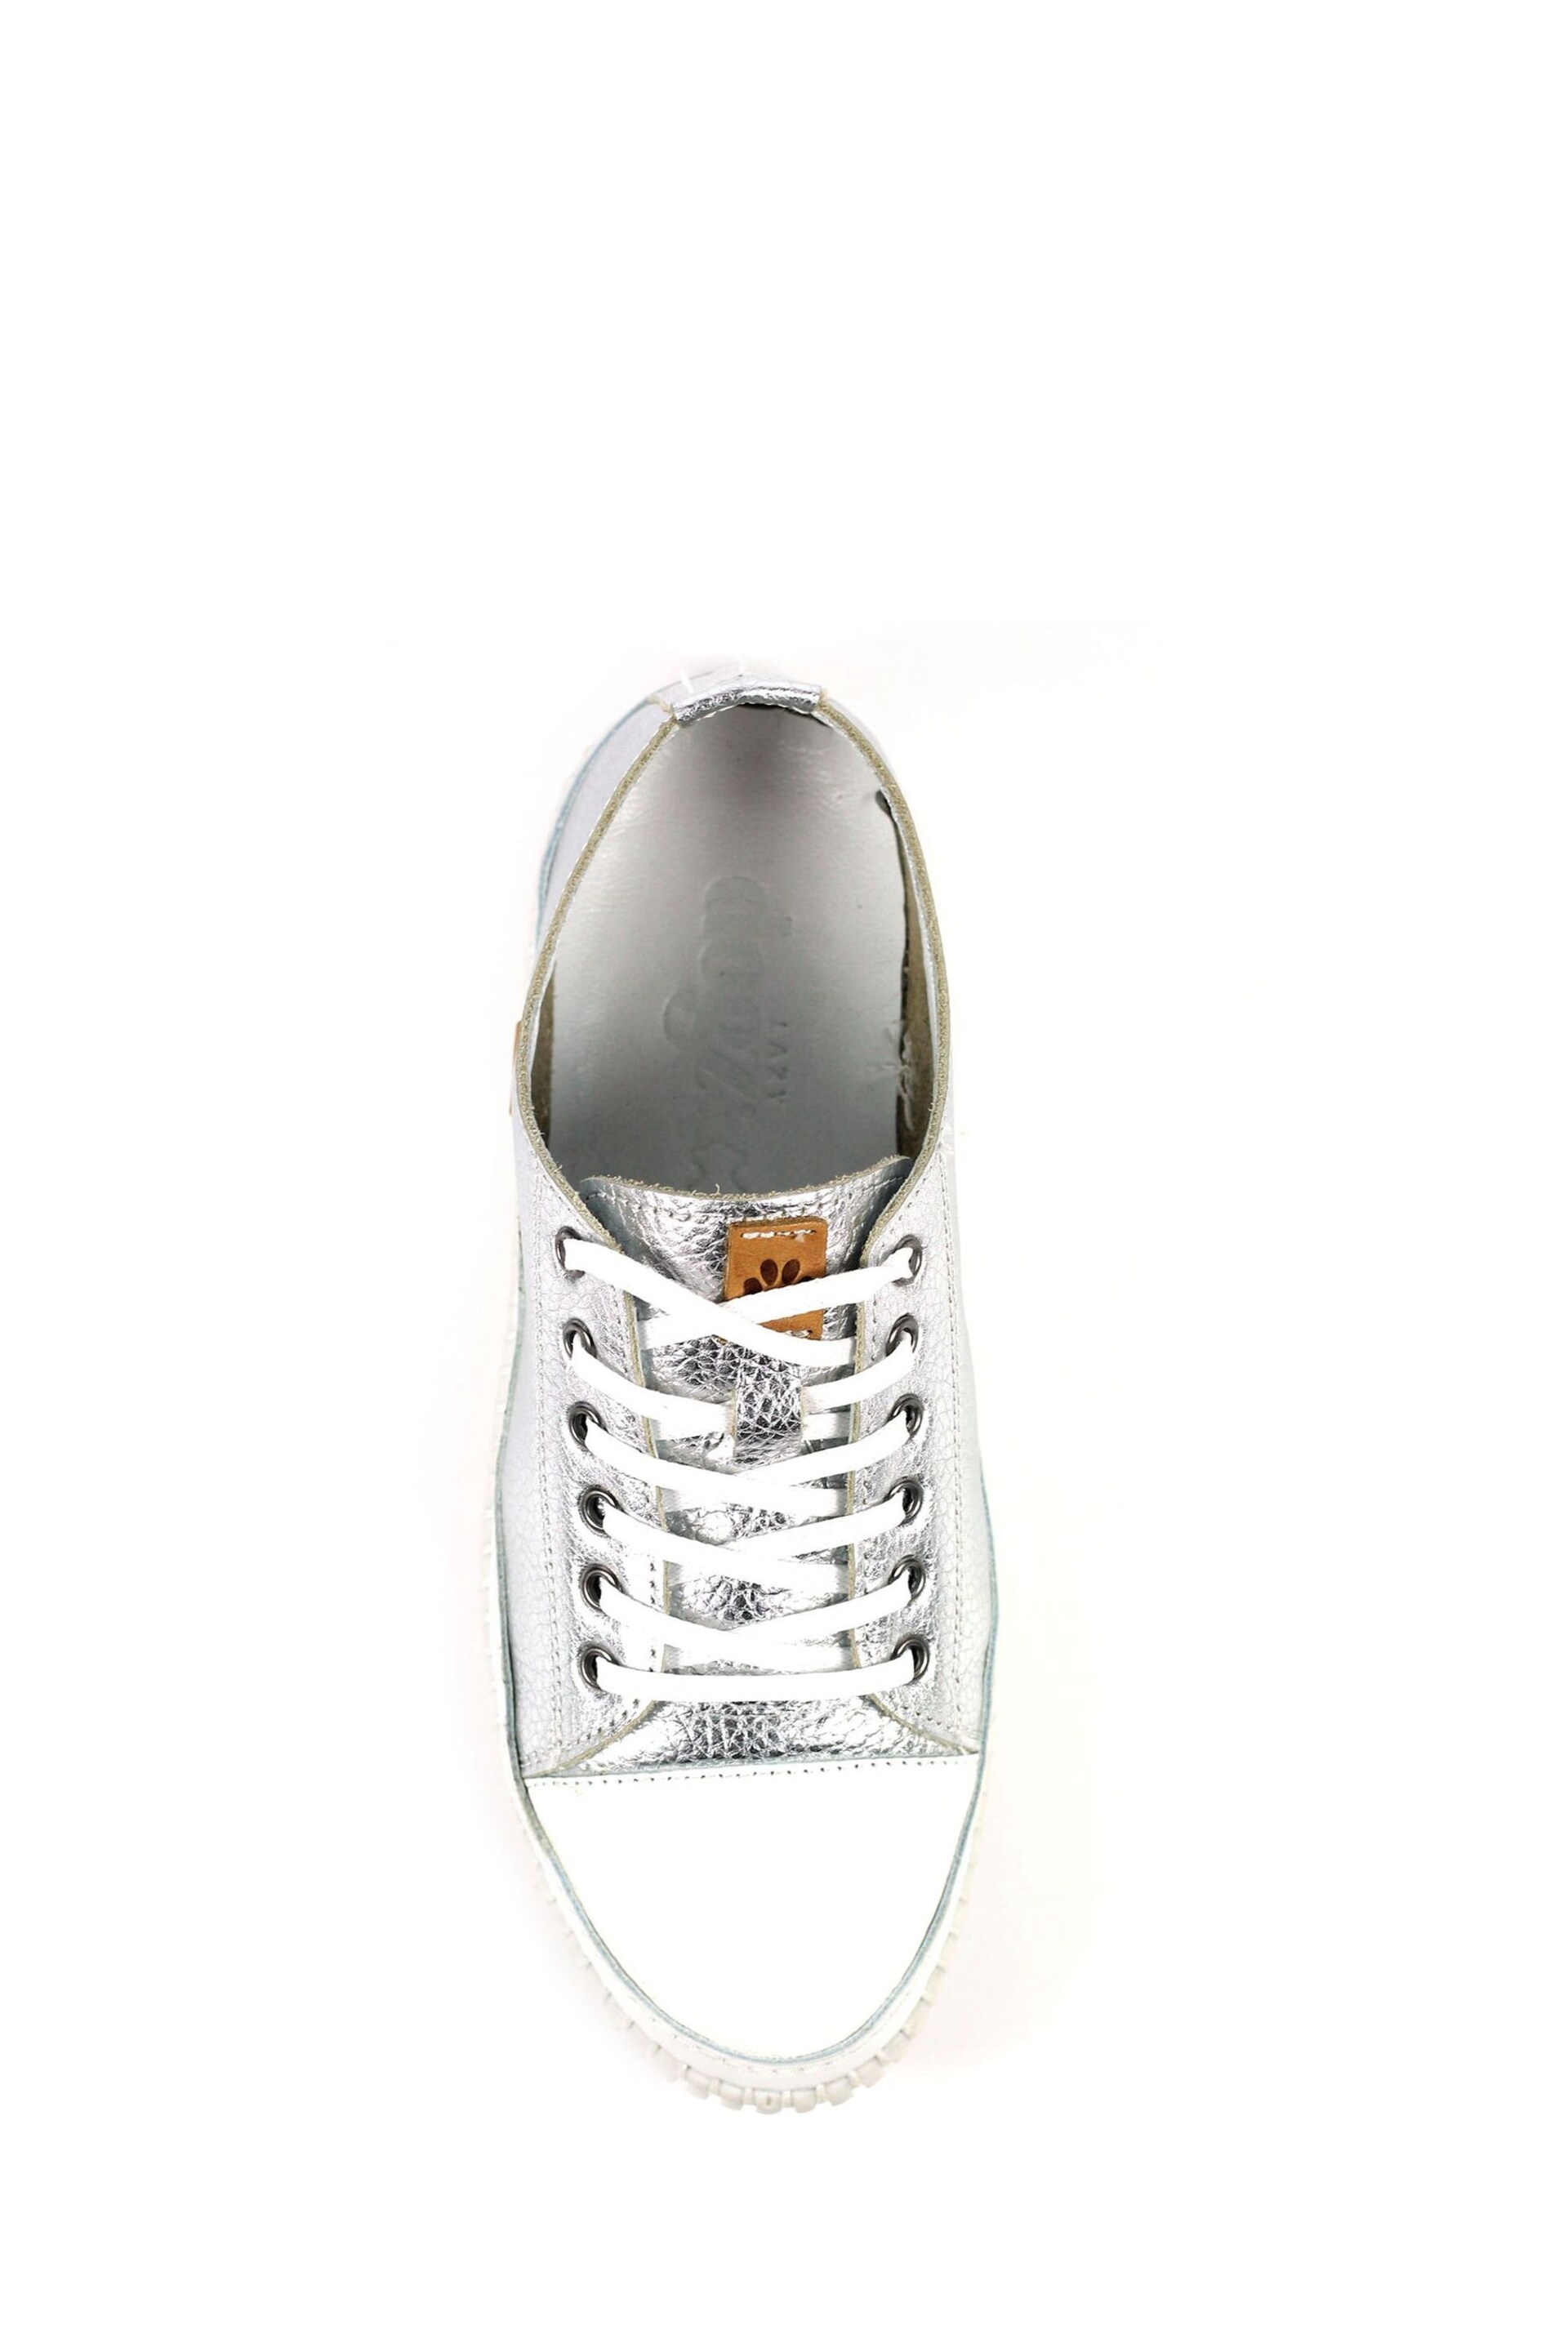 Lazy Dogz Silver Starlet Lea Shoes - Image 7 of 8